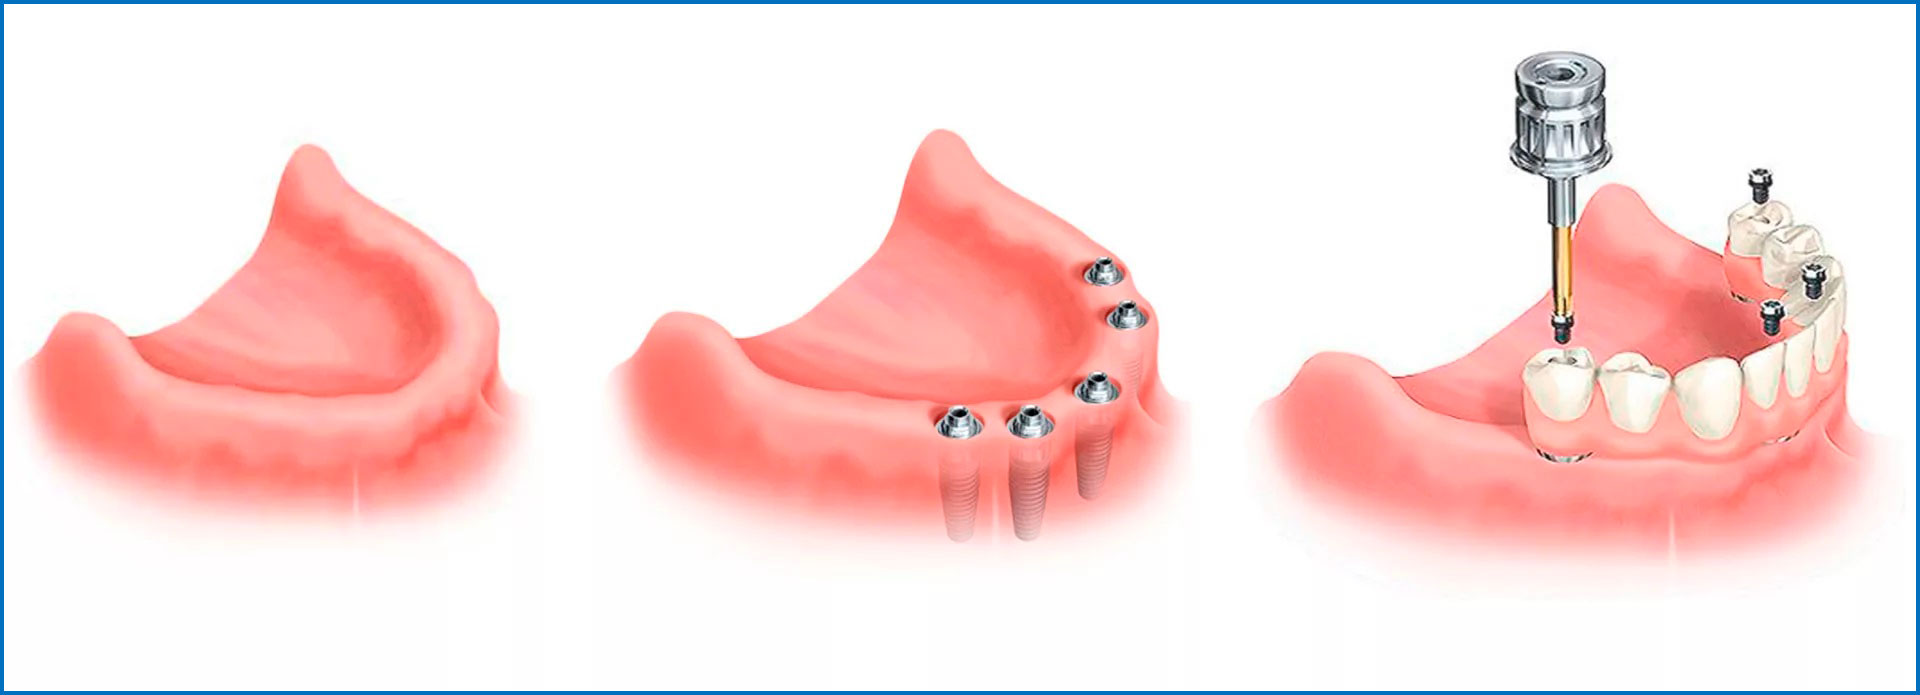 Протез на имплантах при полном отсутствии. Условно-съёмный протез ( all-on-4). Протез на 2 имплантах на нижнюю челюсть. Резекционный протез на нижнюю челюсть. Протез на 2 имплантатах на нижней челюсти.